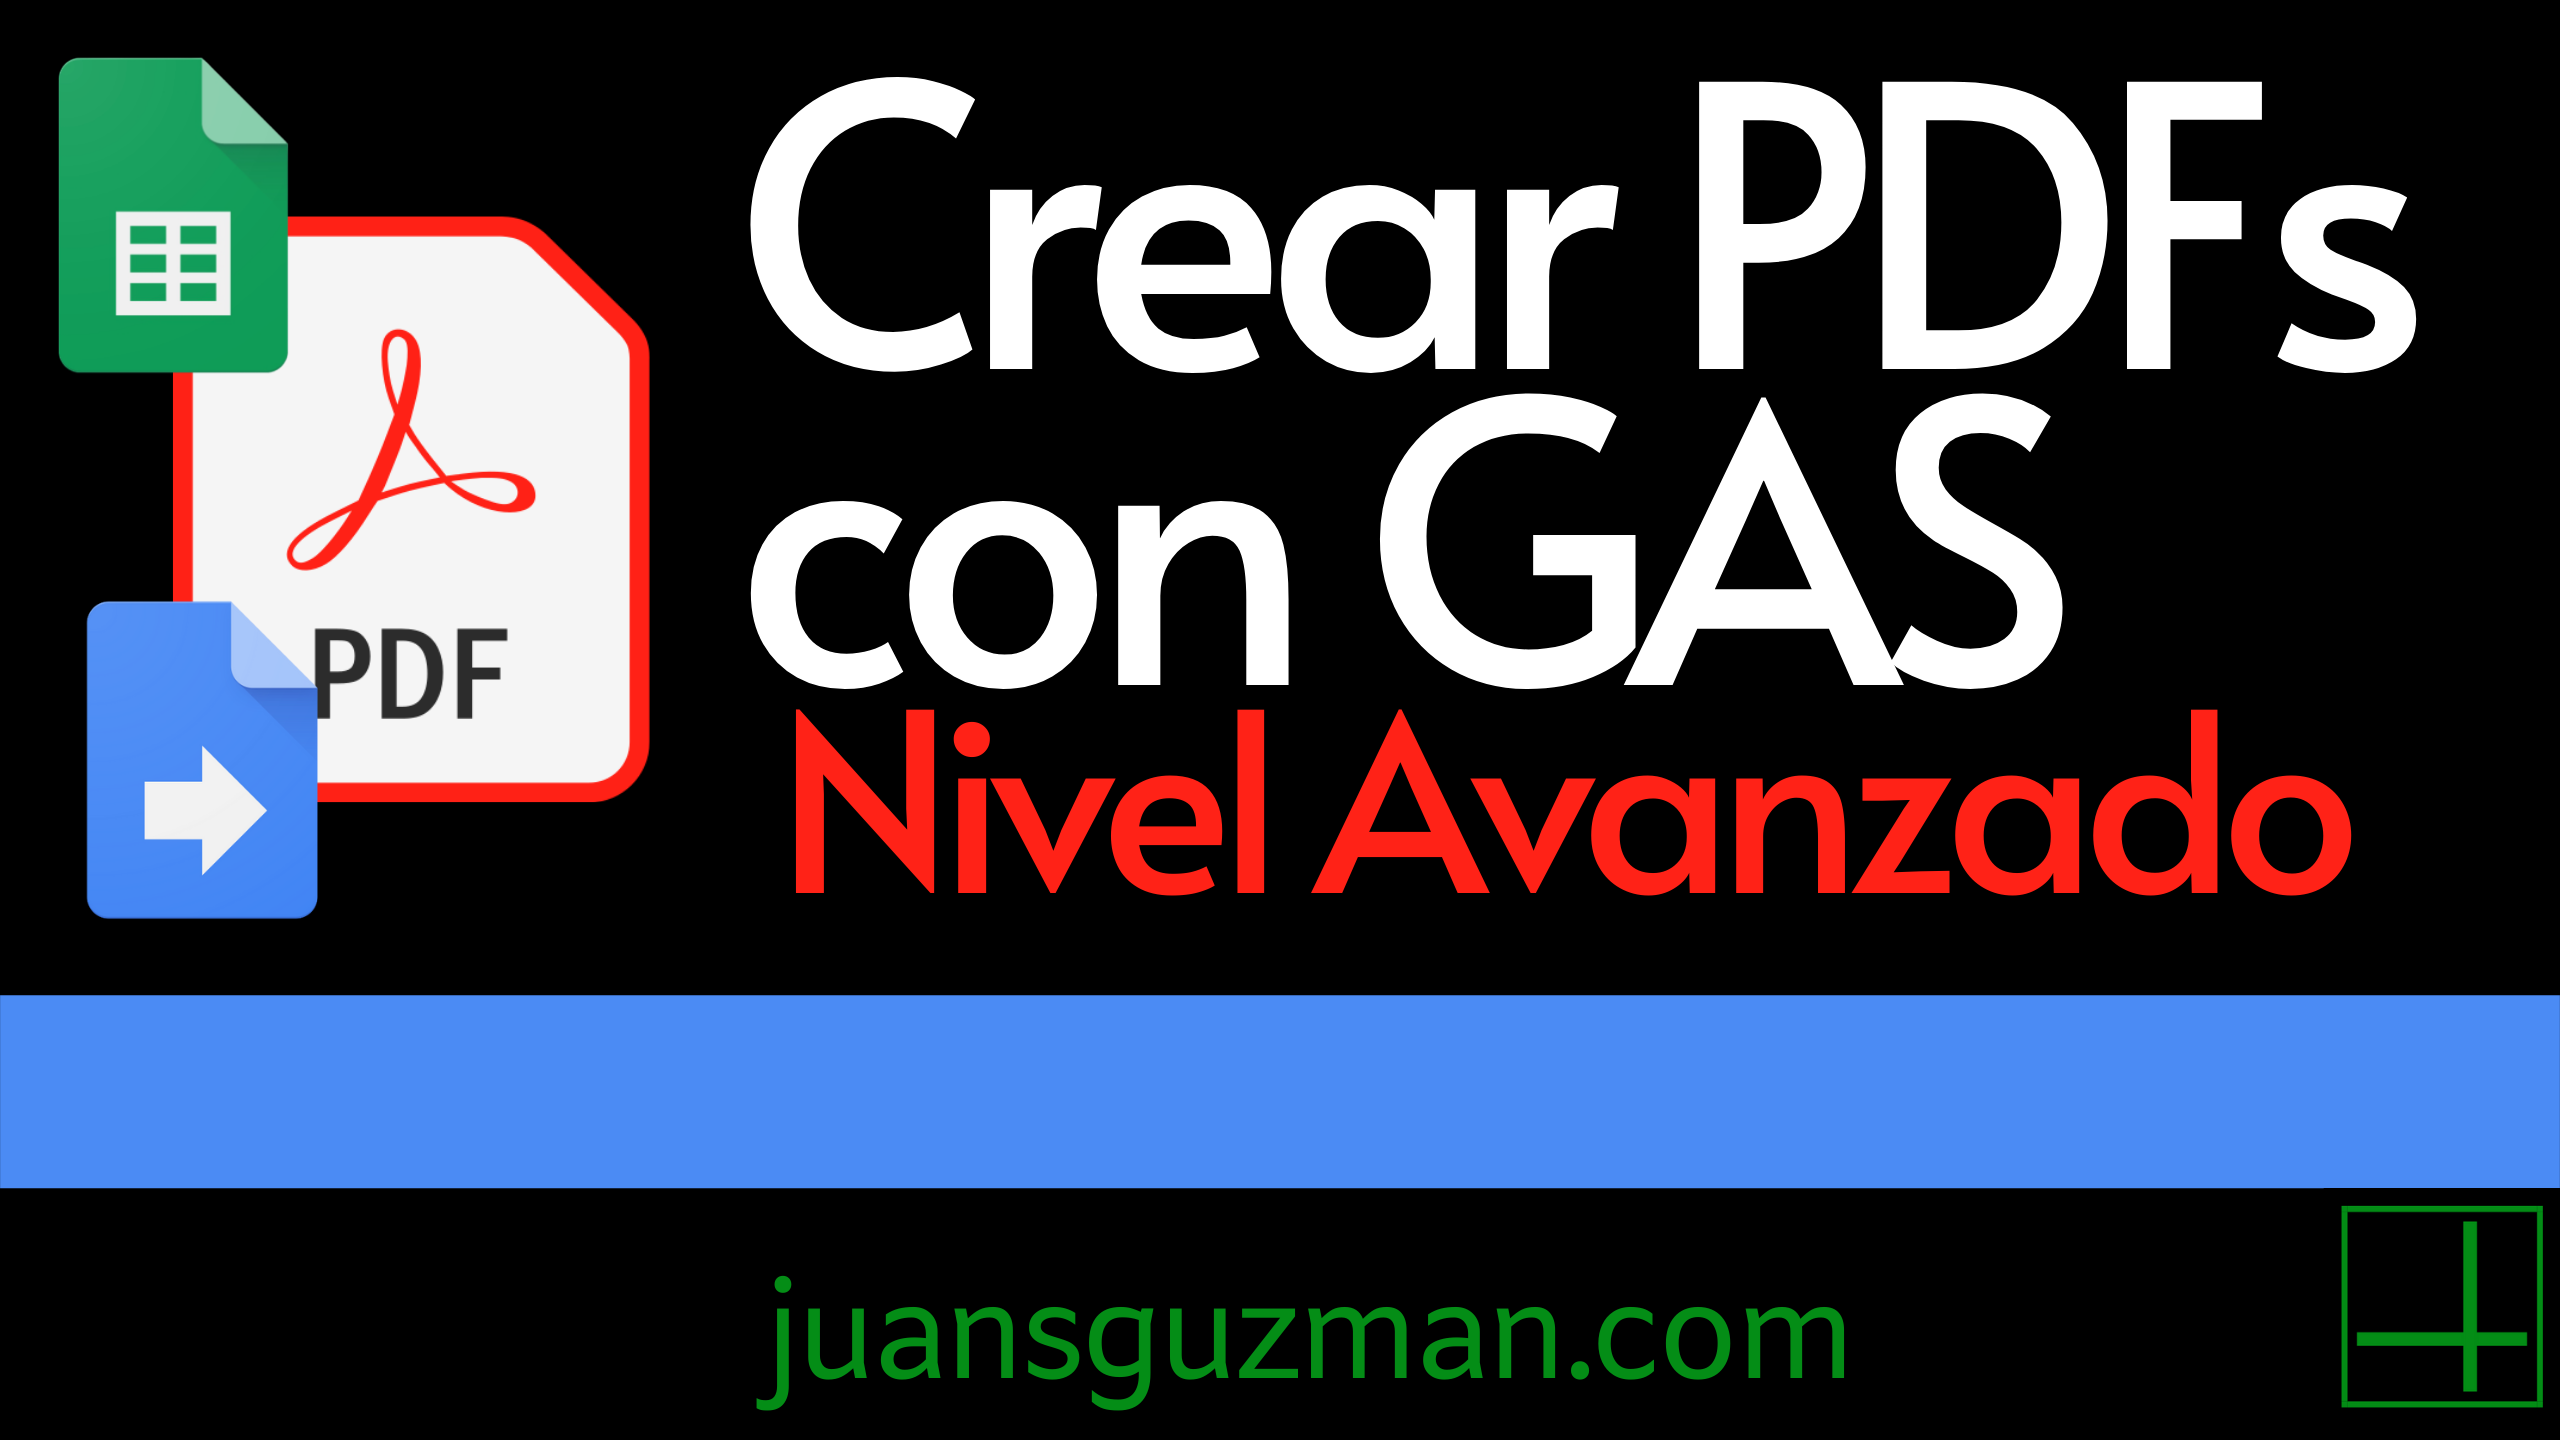 Crear PDFs con GAS - Nivel Avanzado